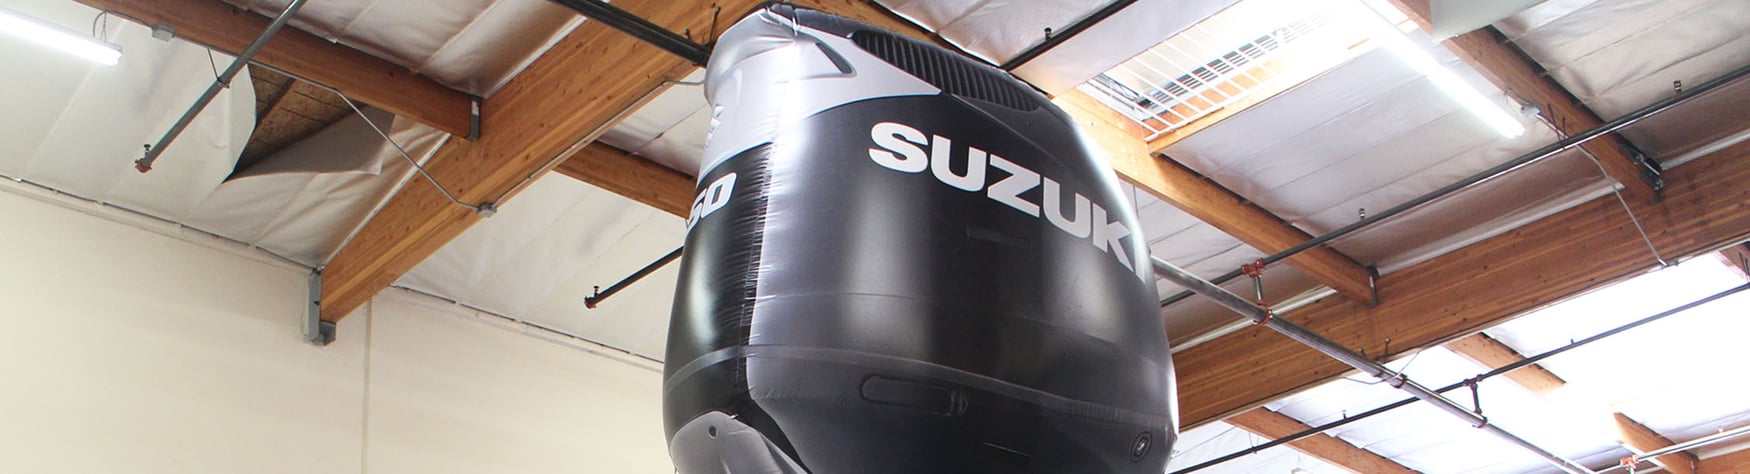 suzuki-boat-engine-replica-inflatable